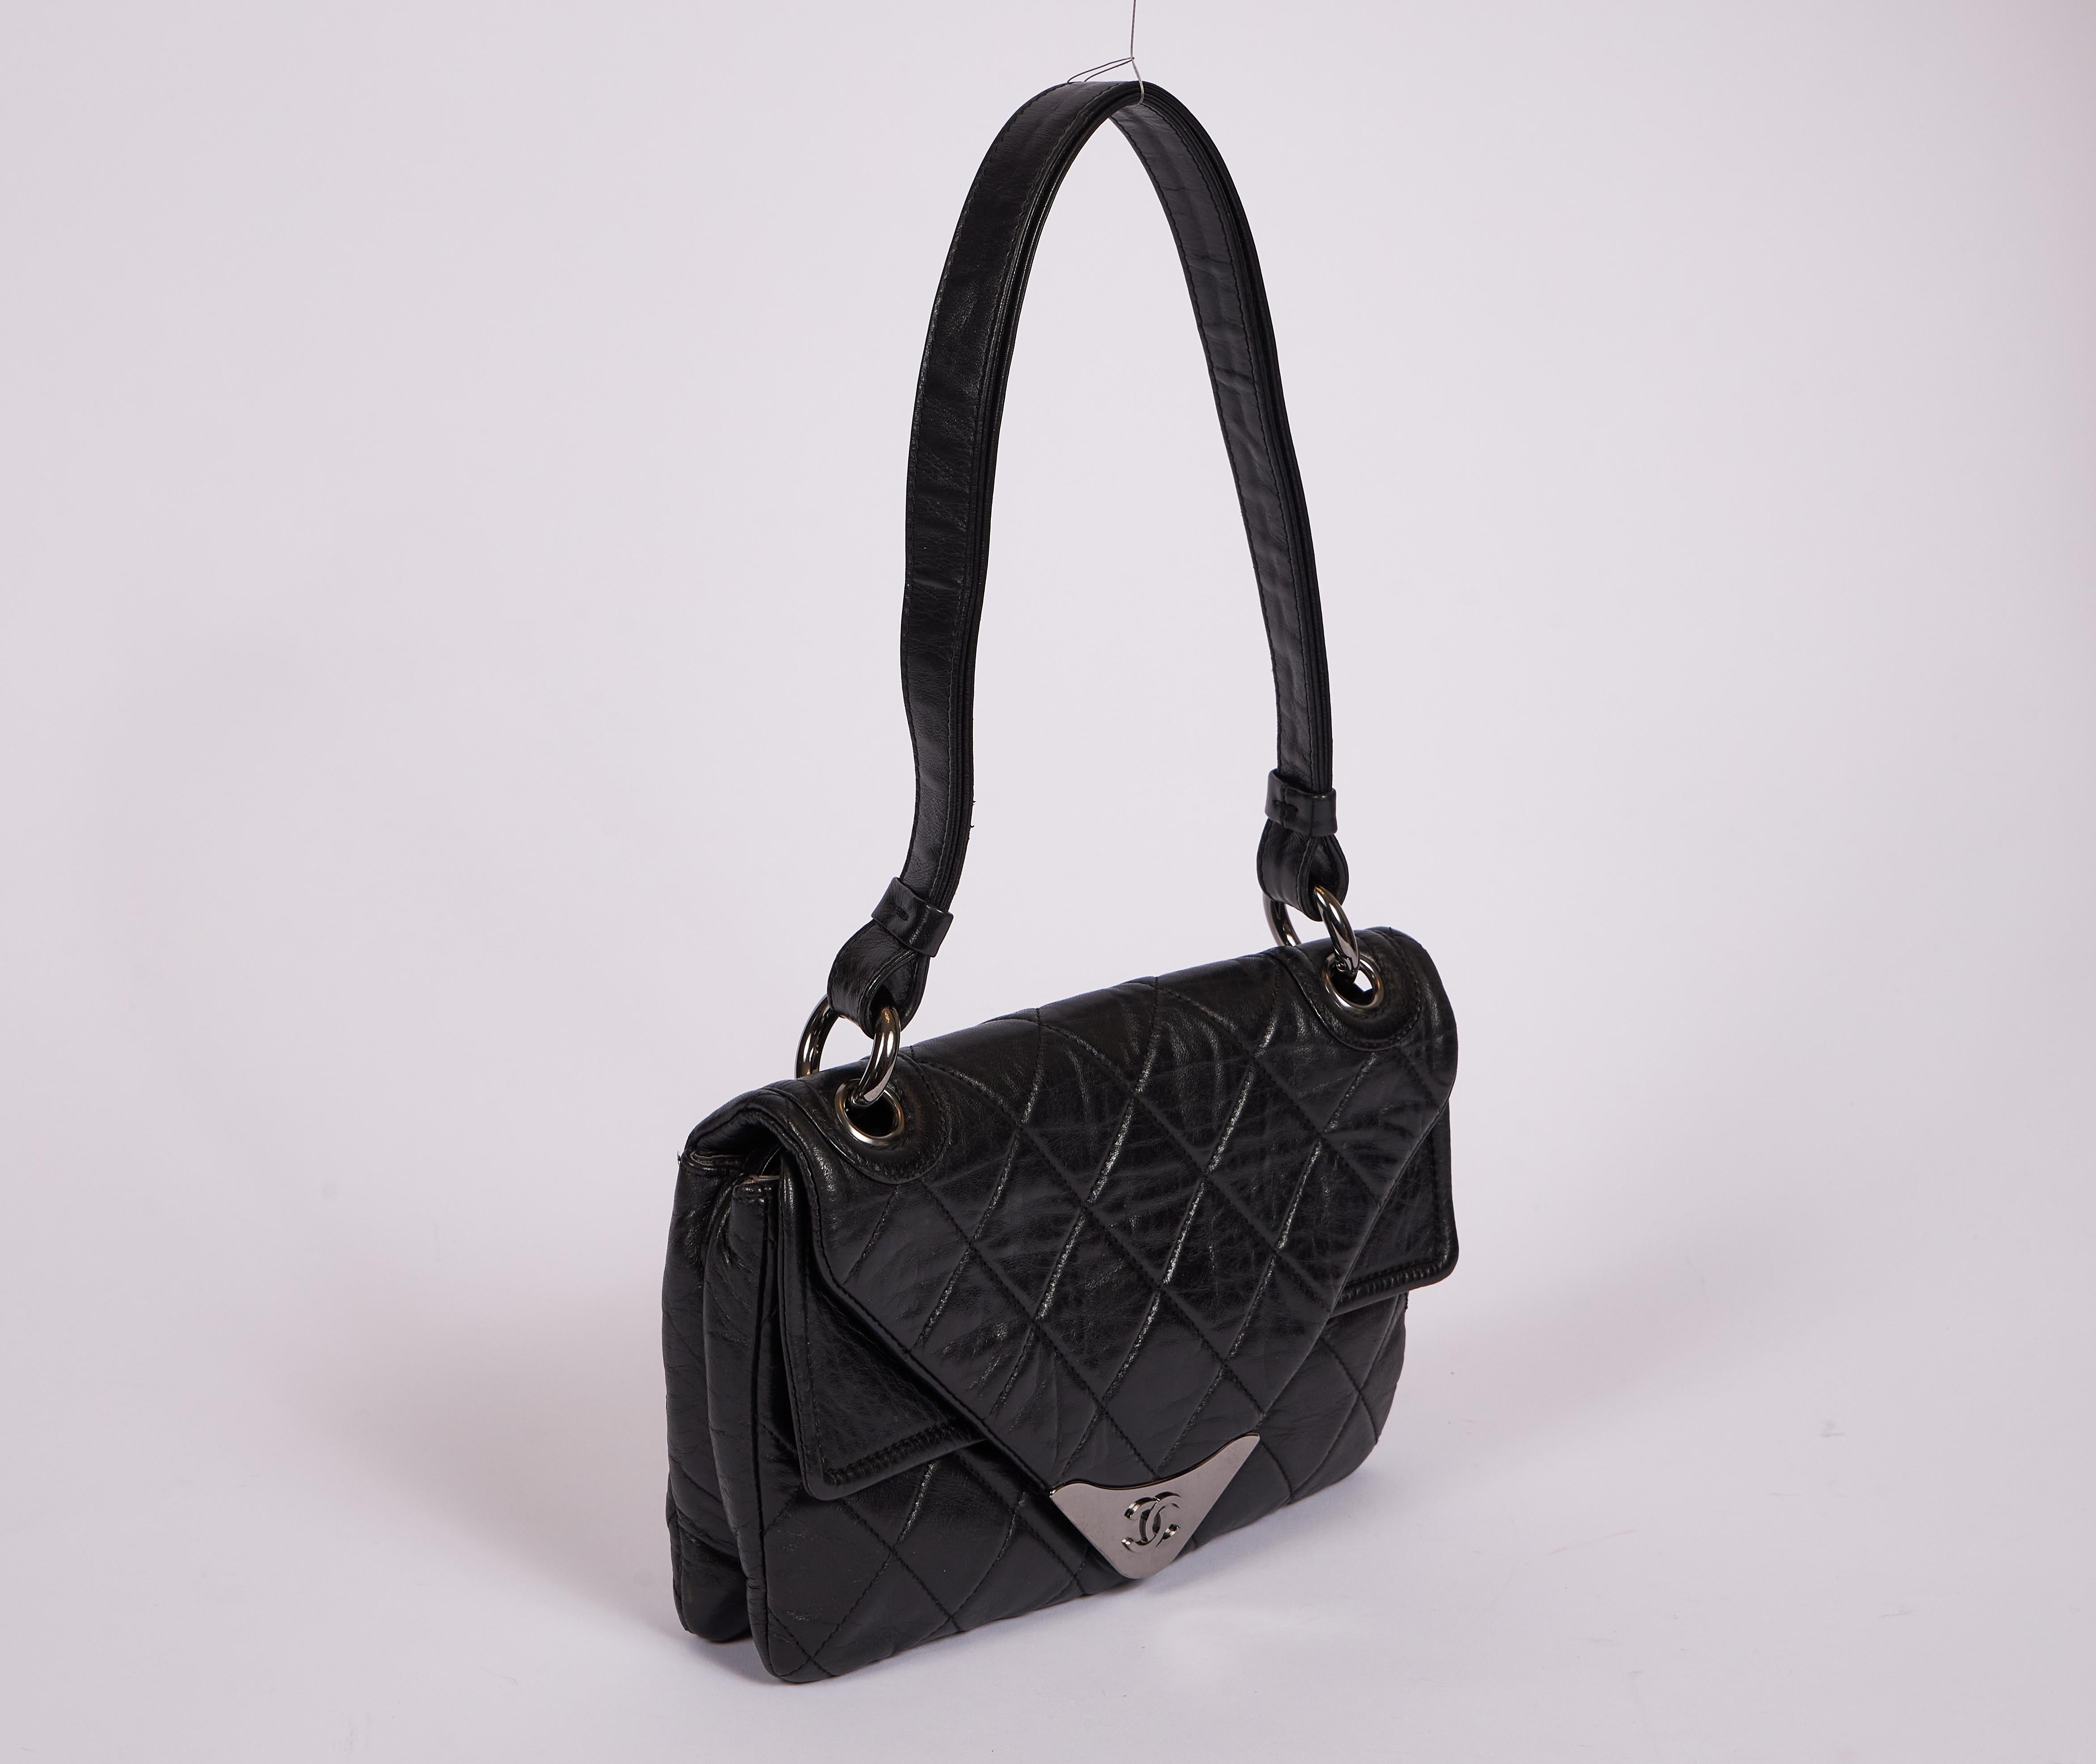 Chanel black lambskin envelope shoulder bag with silver tone hardware. Two interior compartments. Shoulder drop 10